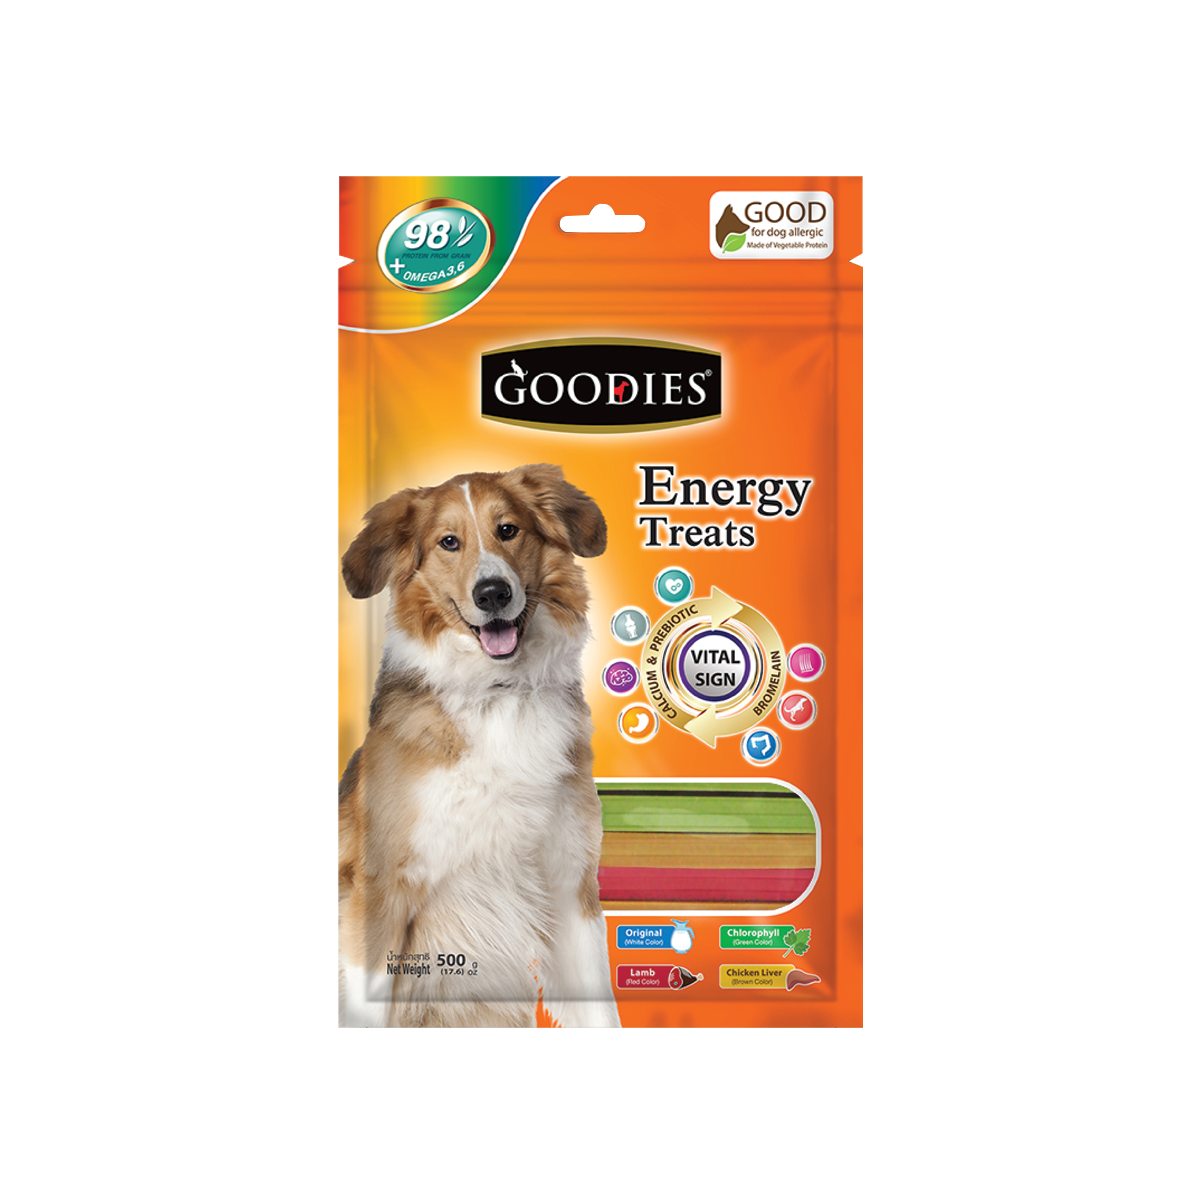 Goodies Energy Treats Dog Snack X-Shaped กู้ดดี้ อิเนอร์จี้ทรีต ขนมสำหรับสุนัข แท่งเหลี่ยม ขนาด 500 กรัม